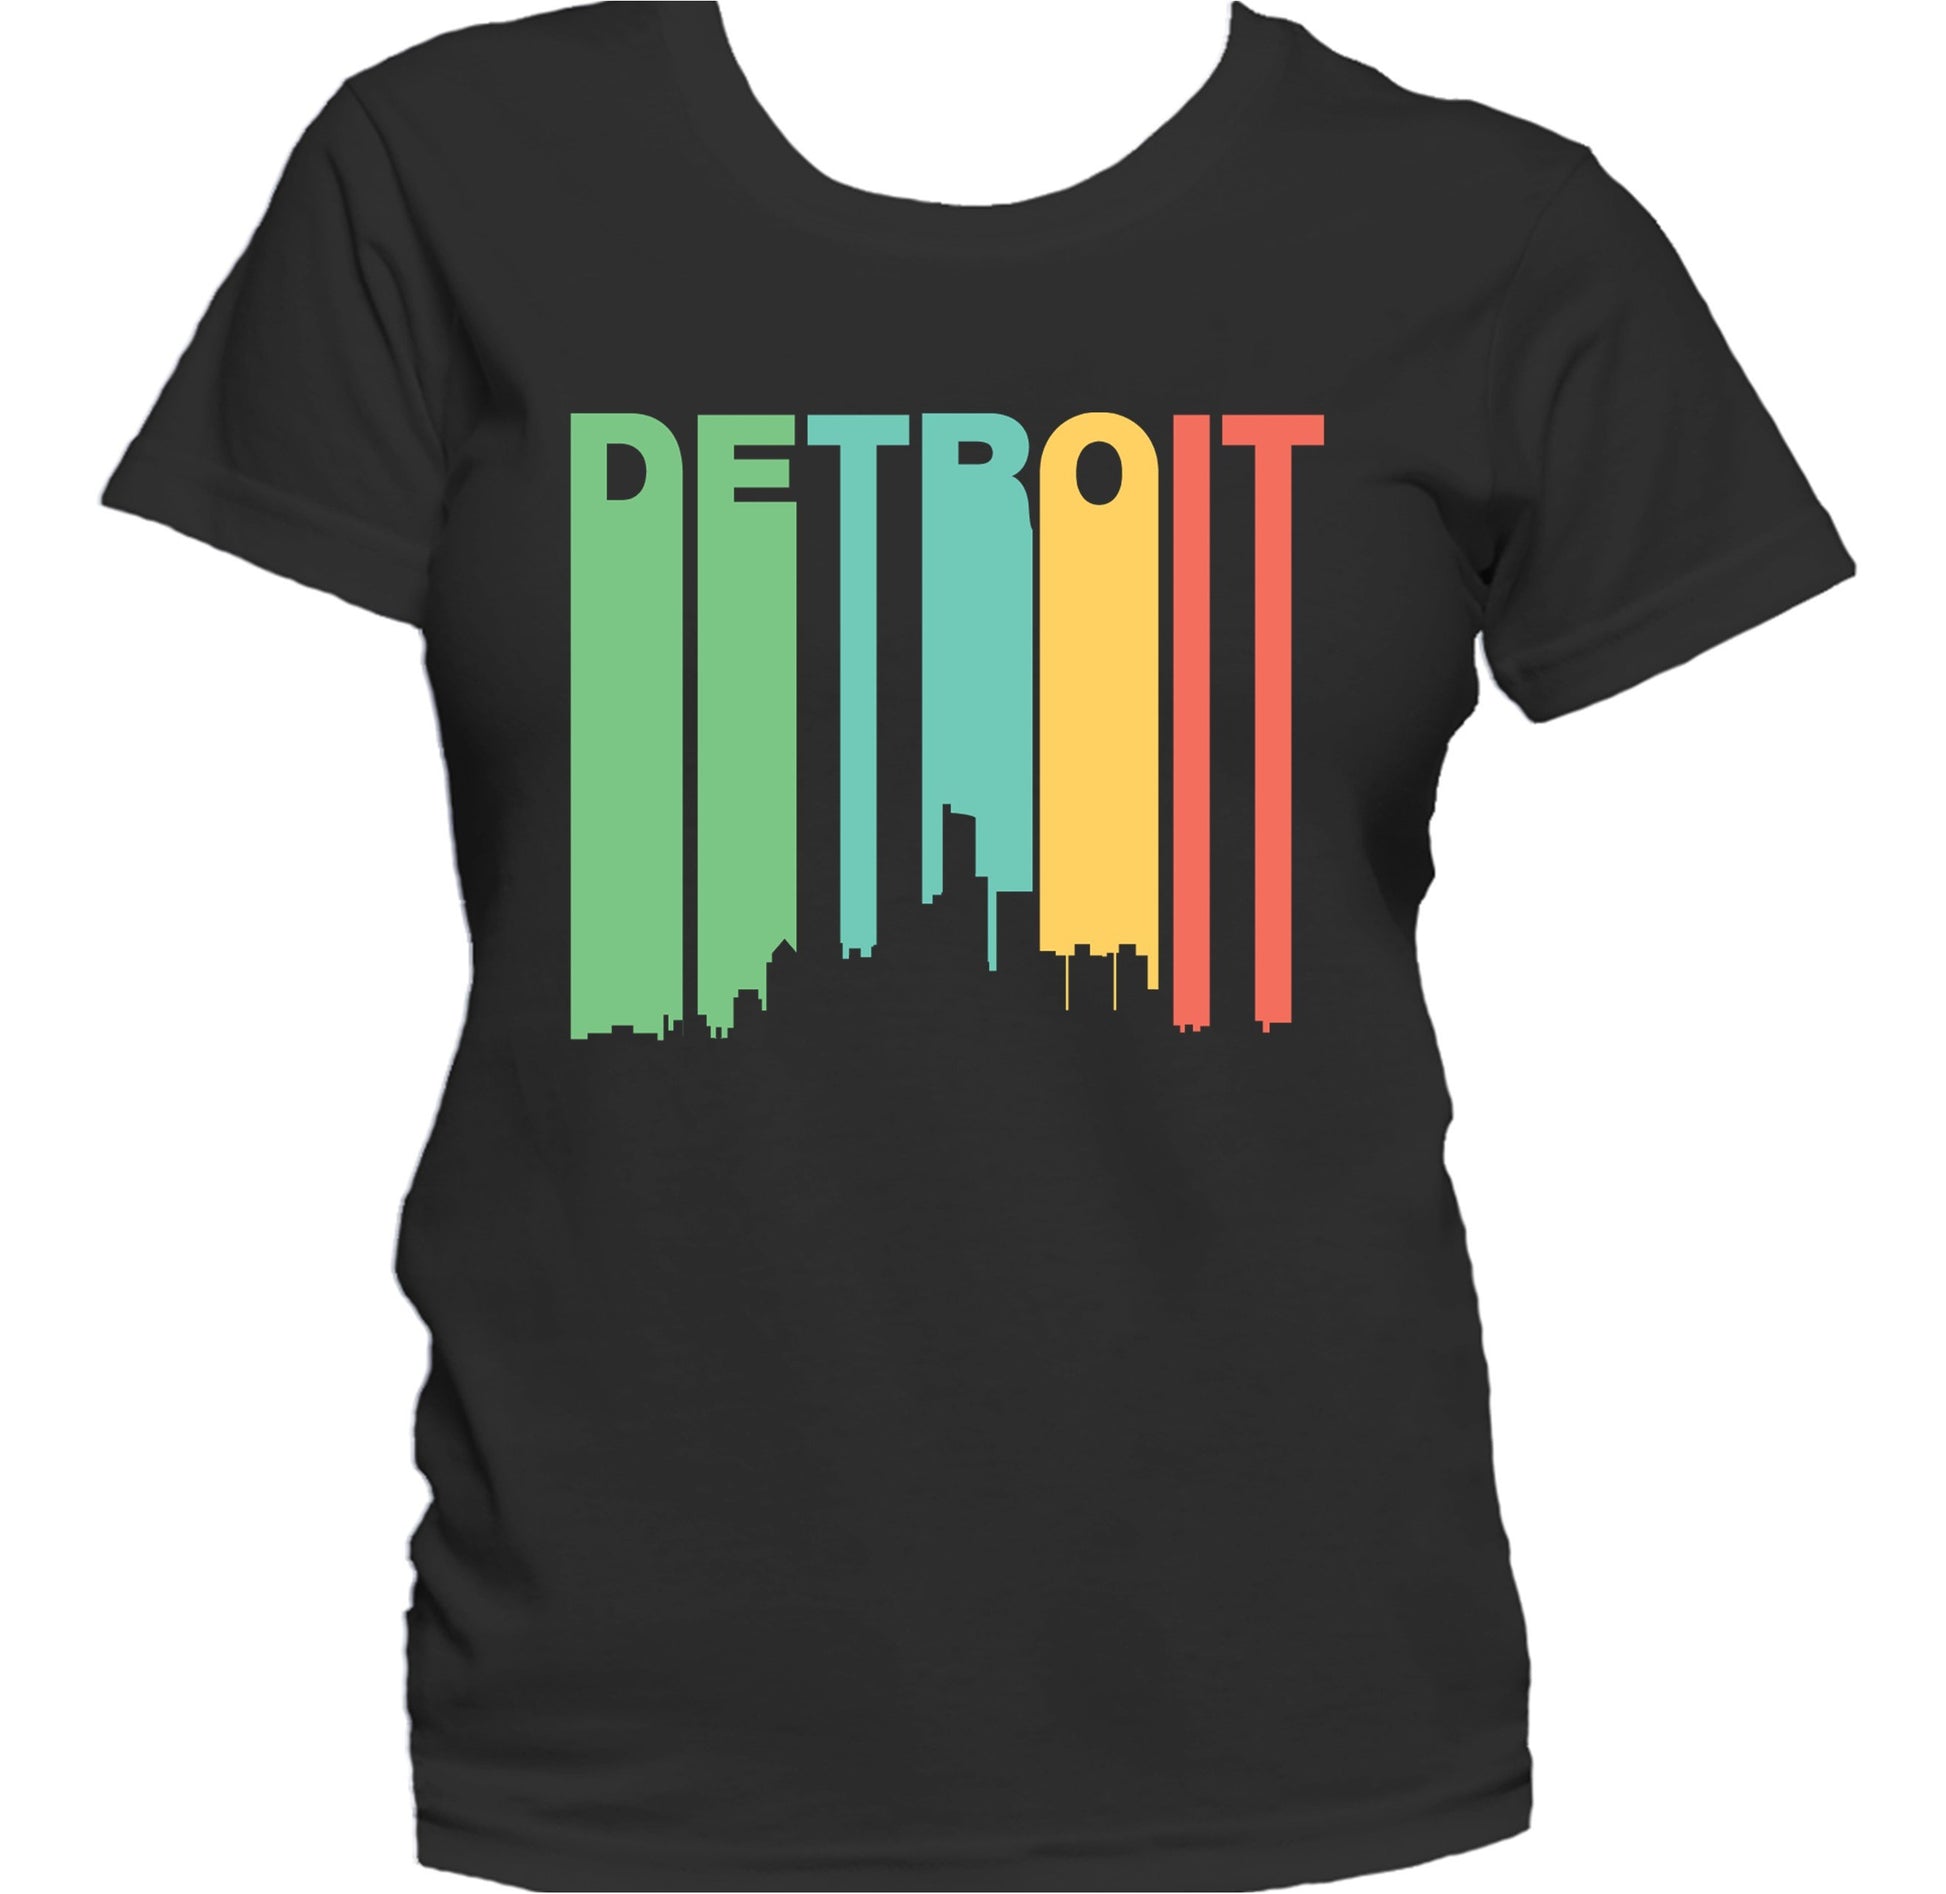 Retro 1970's Style Detroit Michigan Skyline Women's T-Shirt